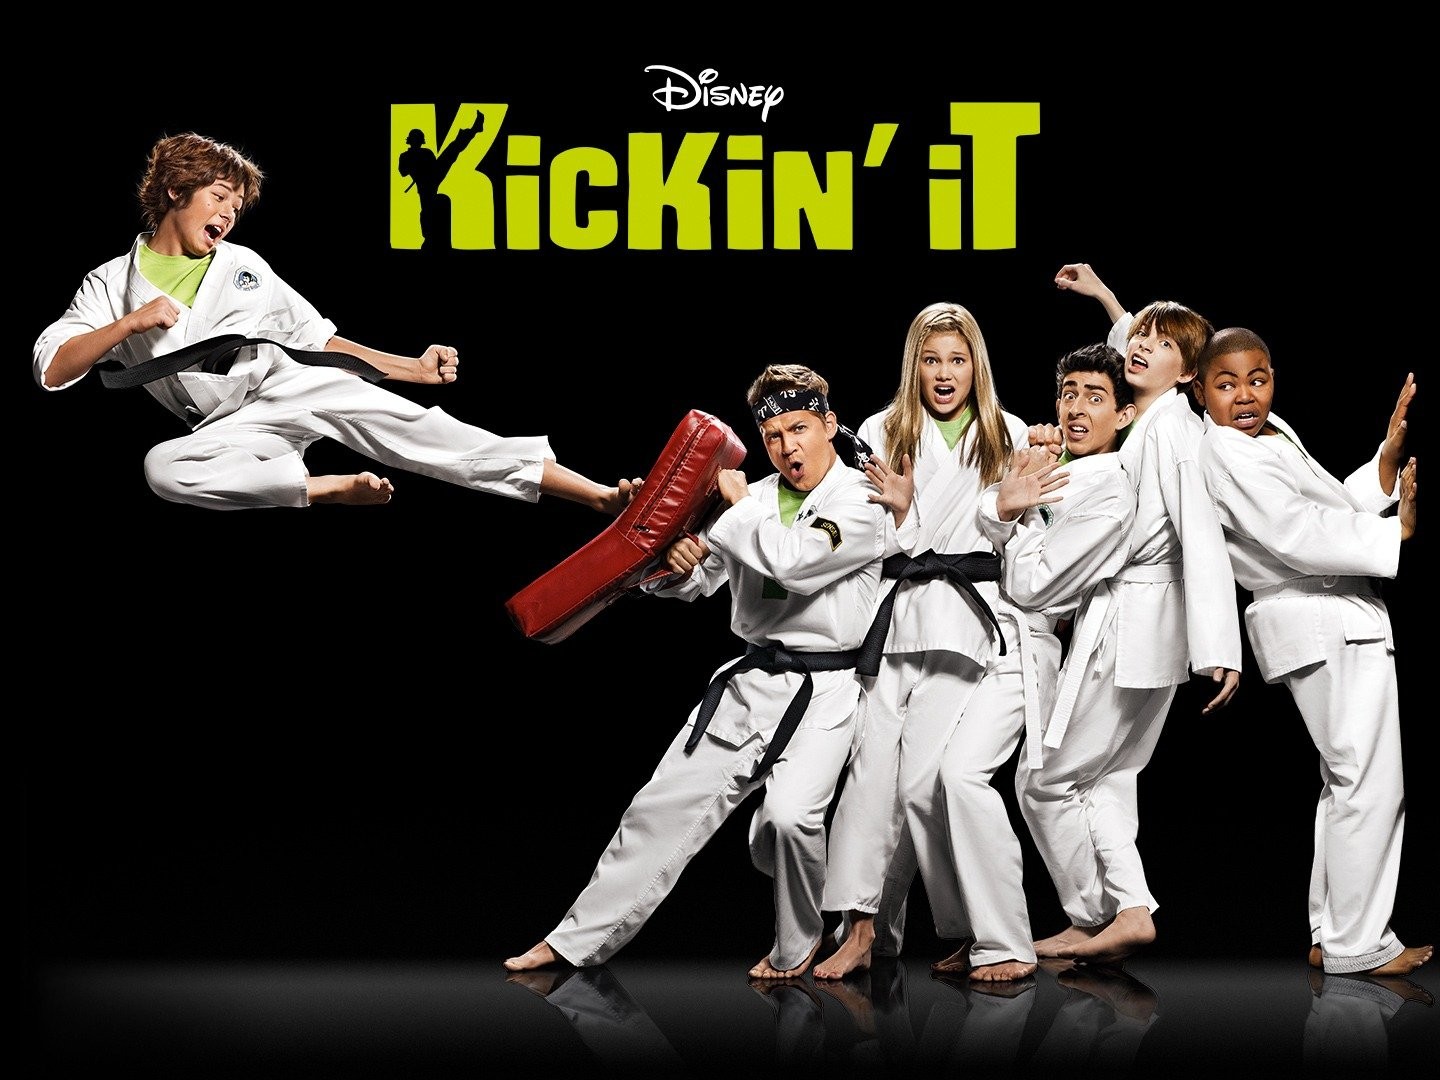 Taekwondo - Rotten Tomatoes